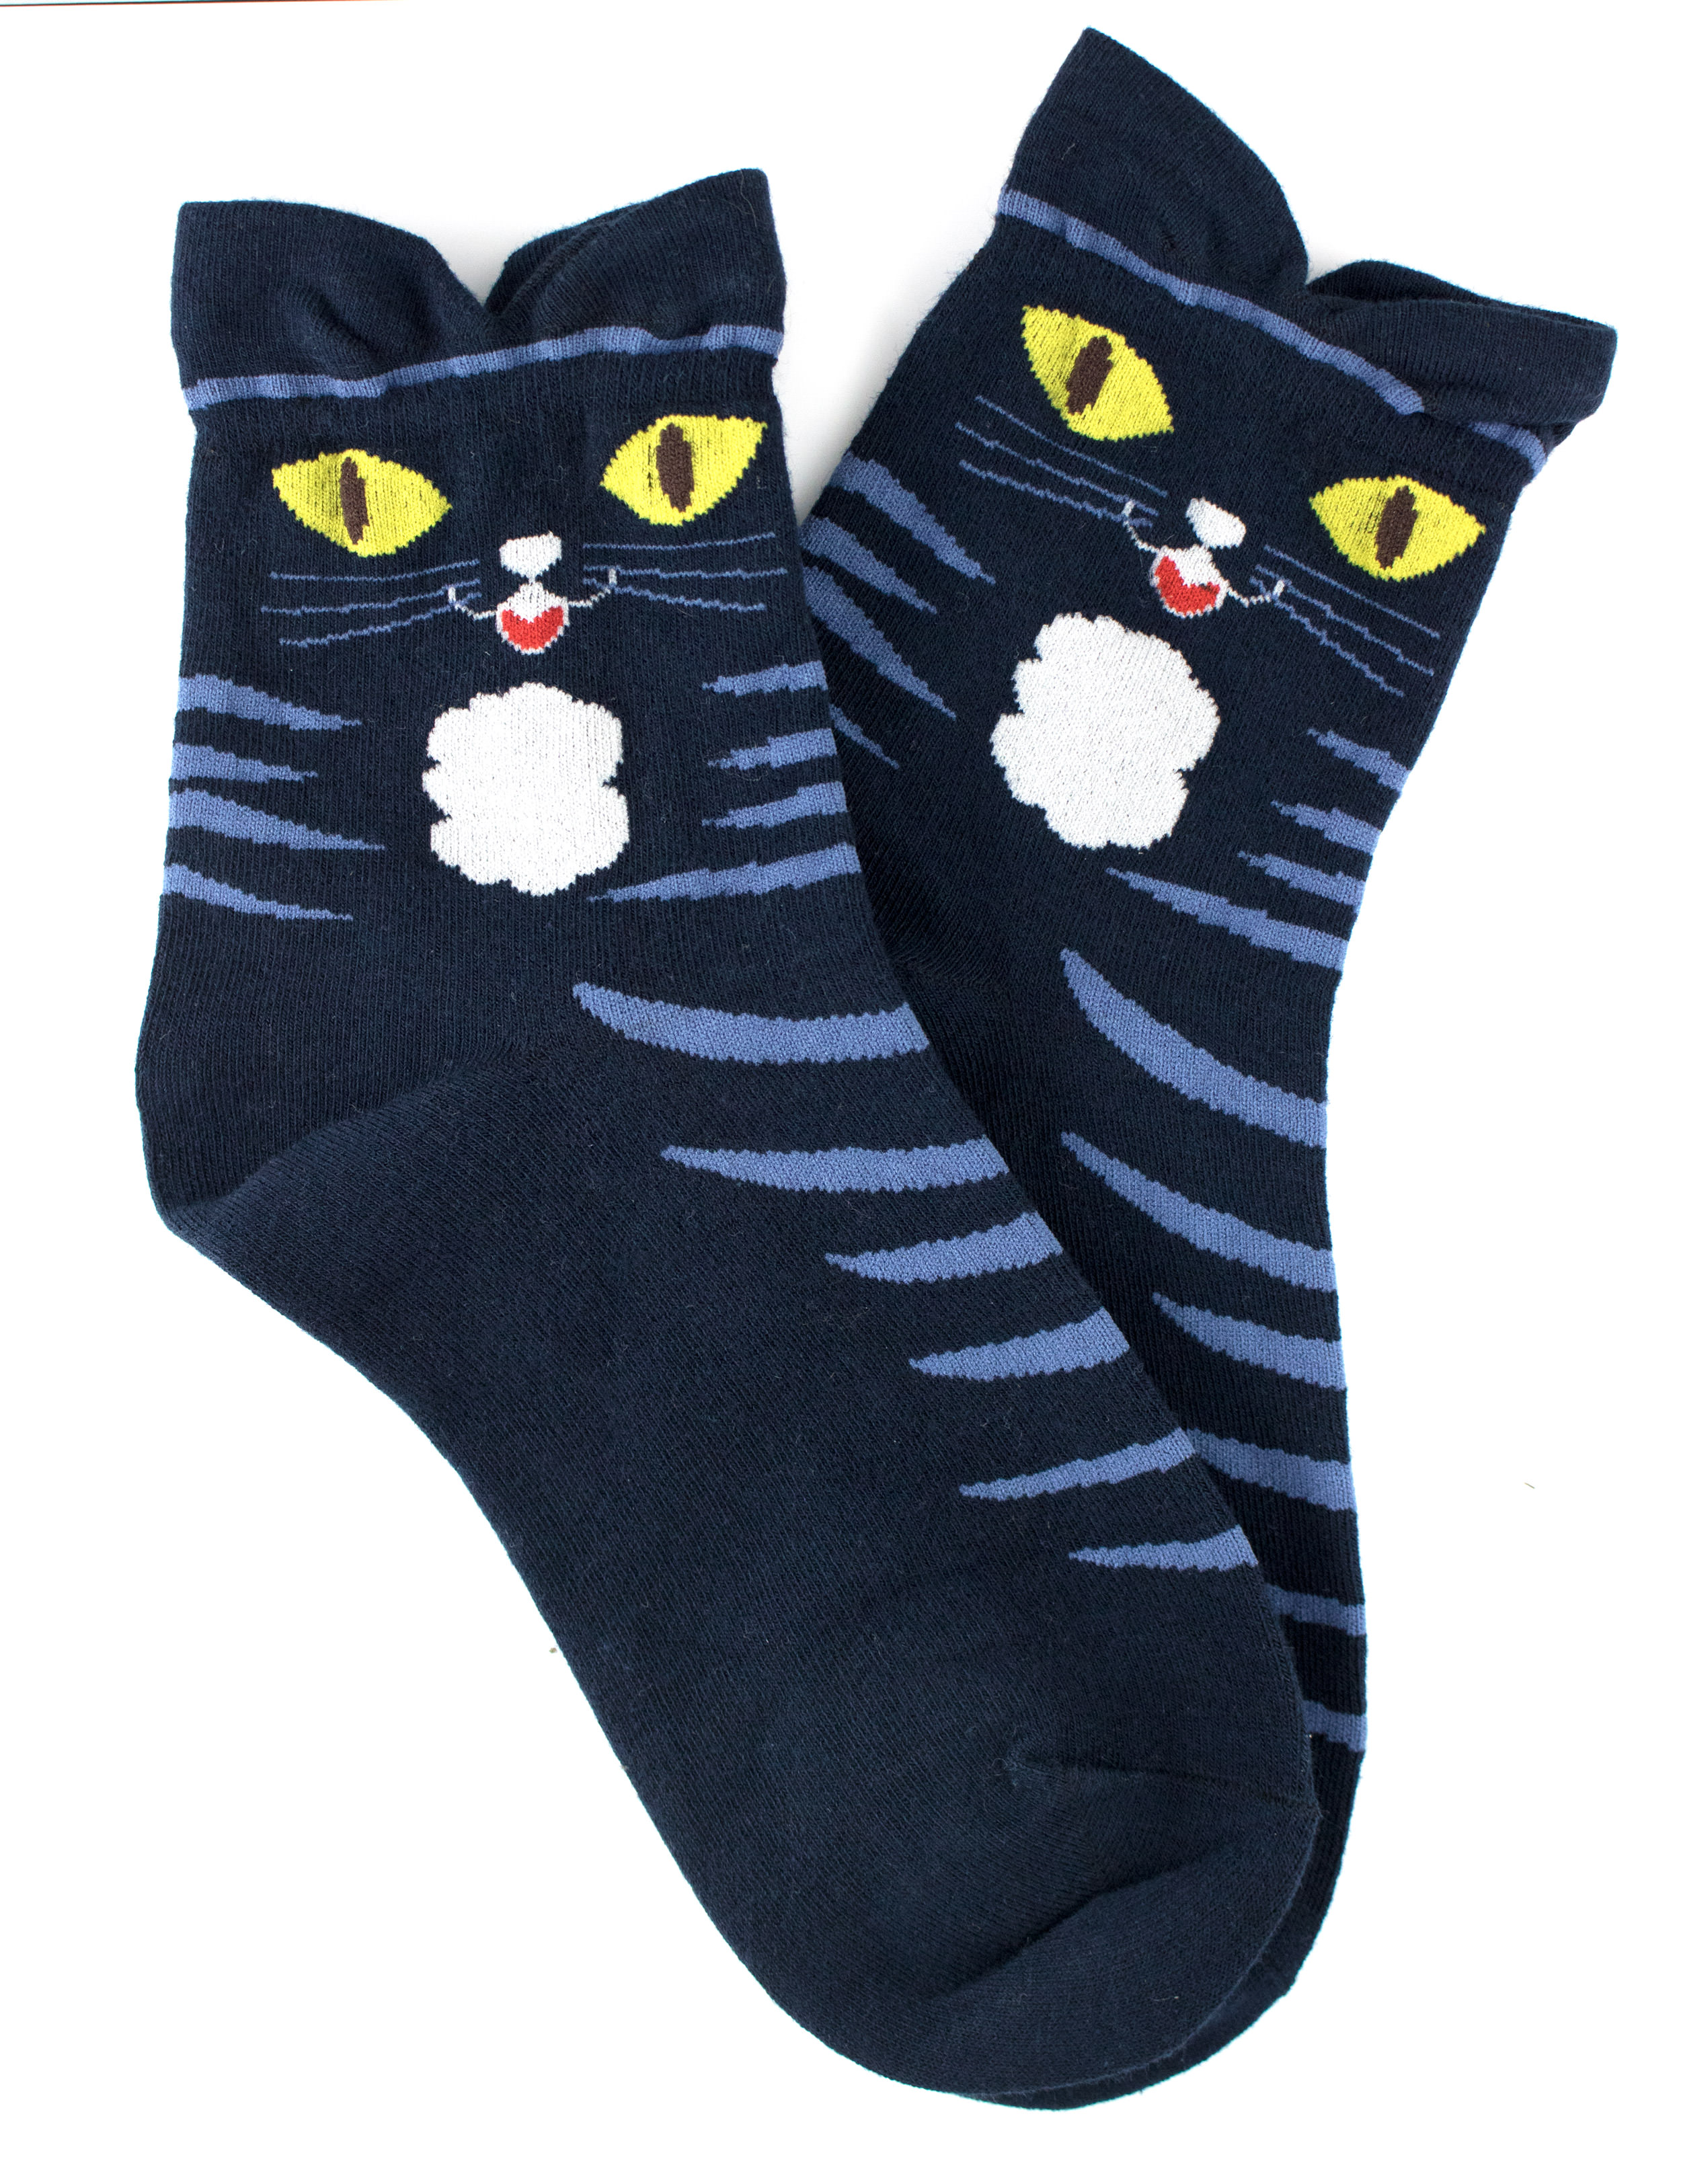 Navy Blue Cat Ears Socks - iHeartCats.com